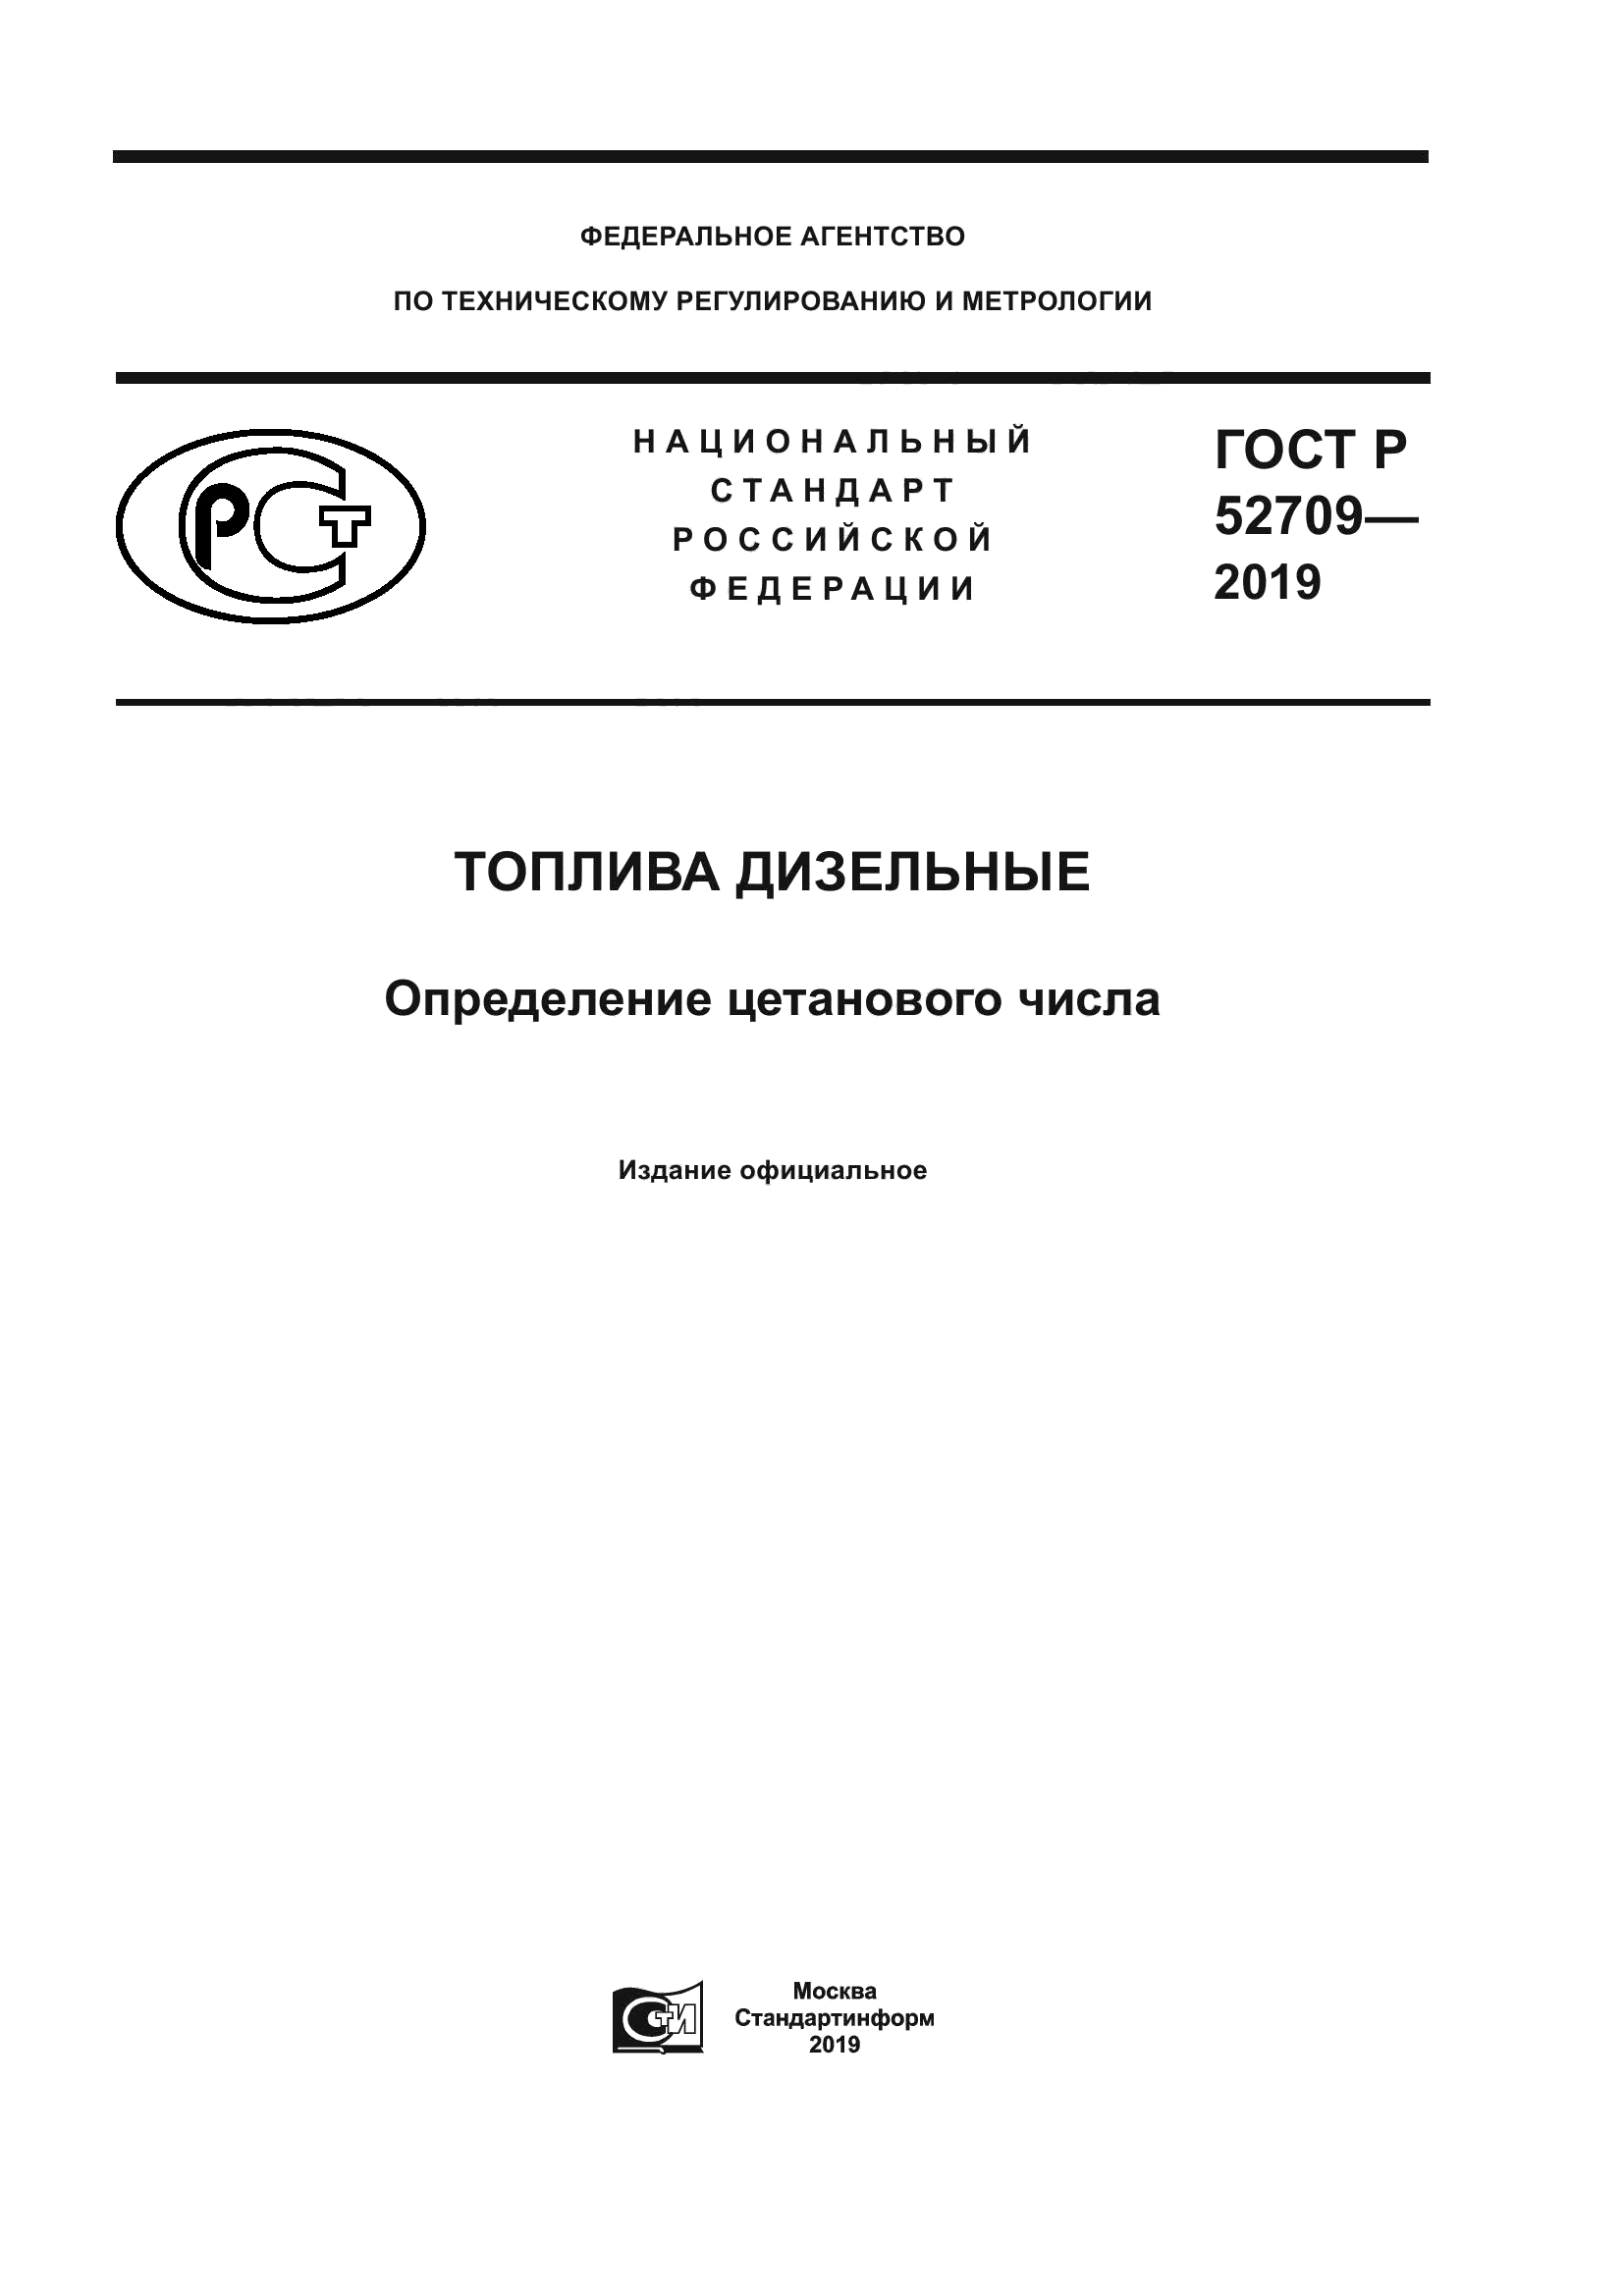 ГОСТ Р 52709-2019